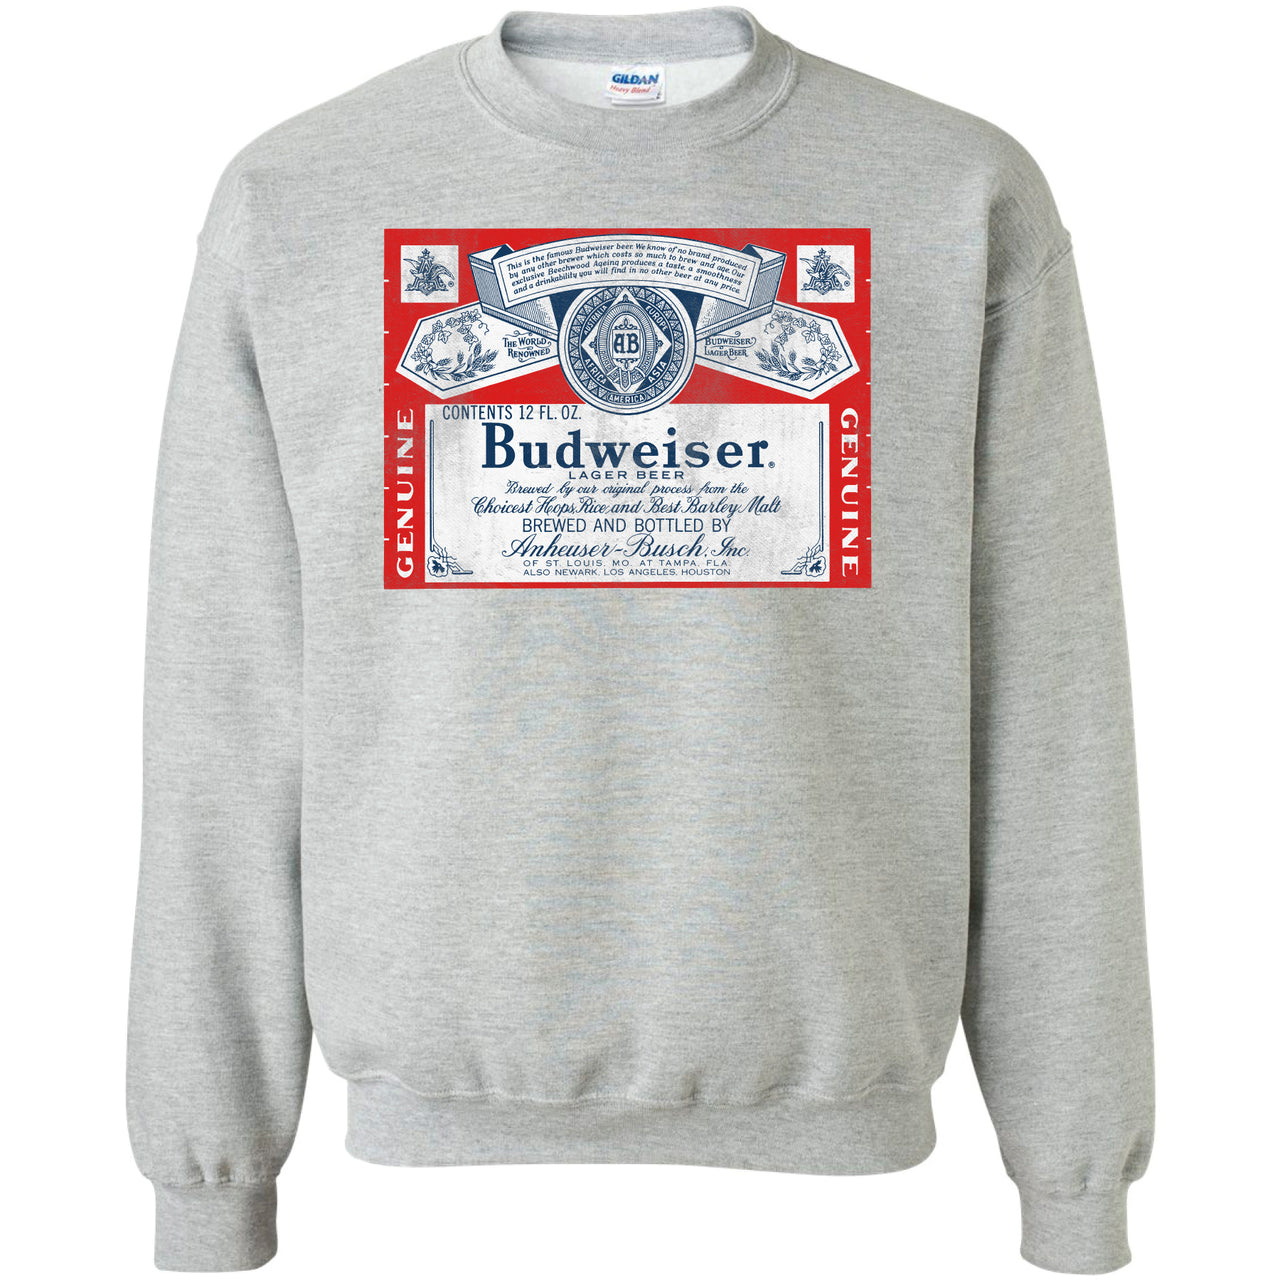 Budweiser - Vintage 1966 Distressed Label Crew Sweatshirt